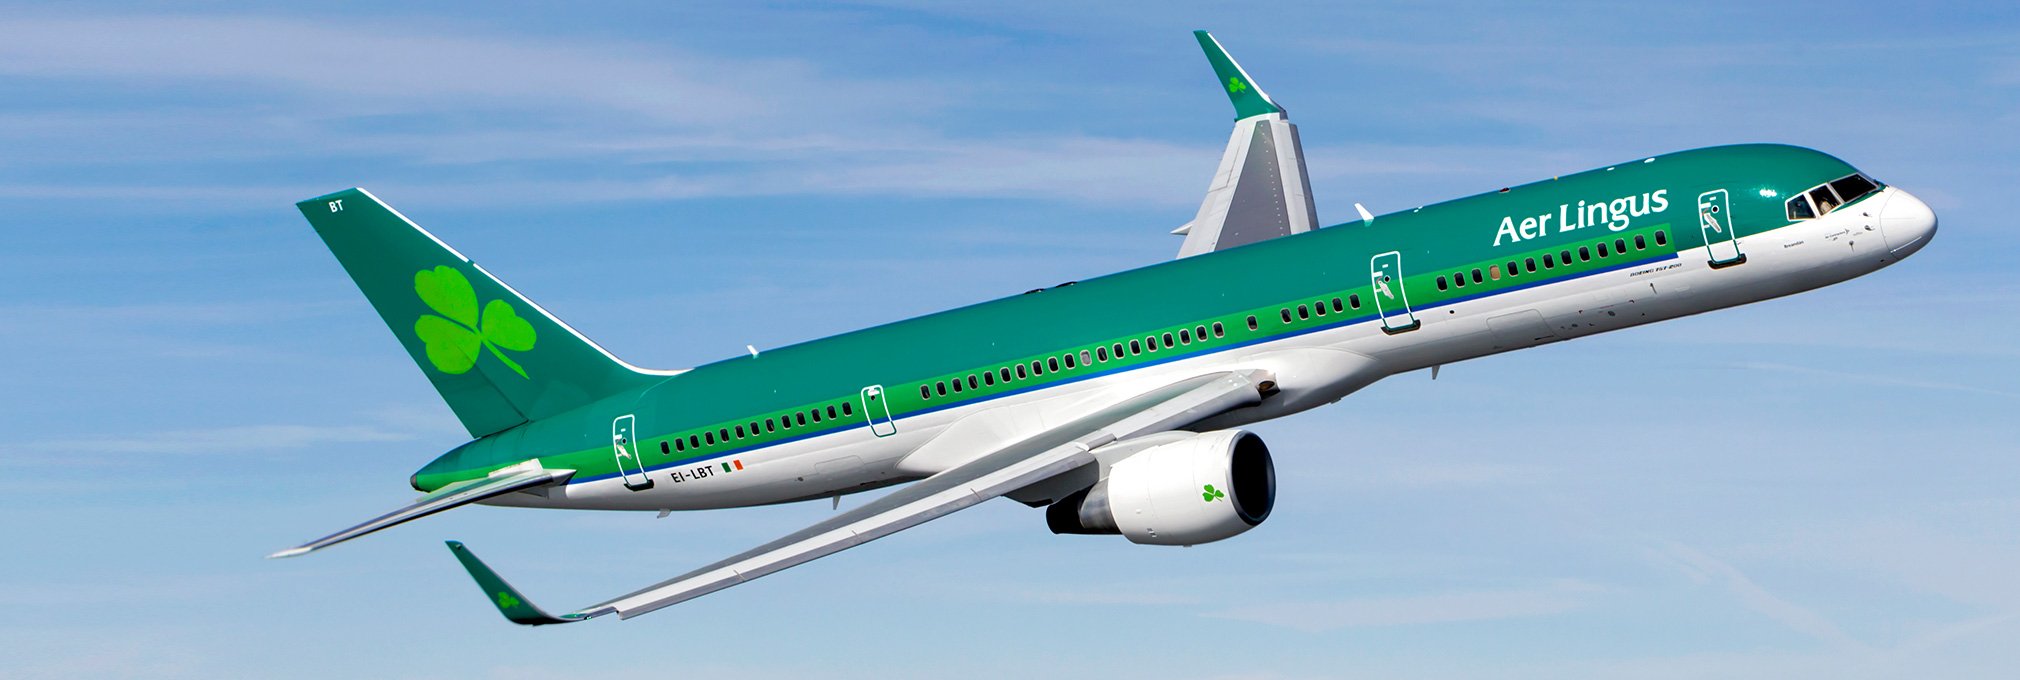 promotional codes Aer Lingus